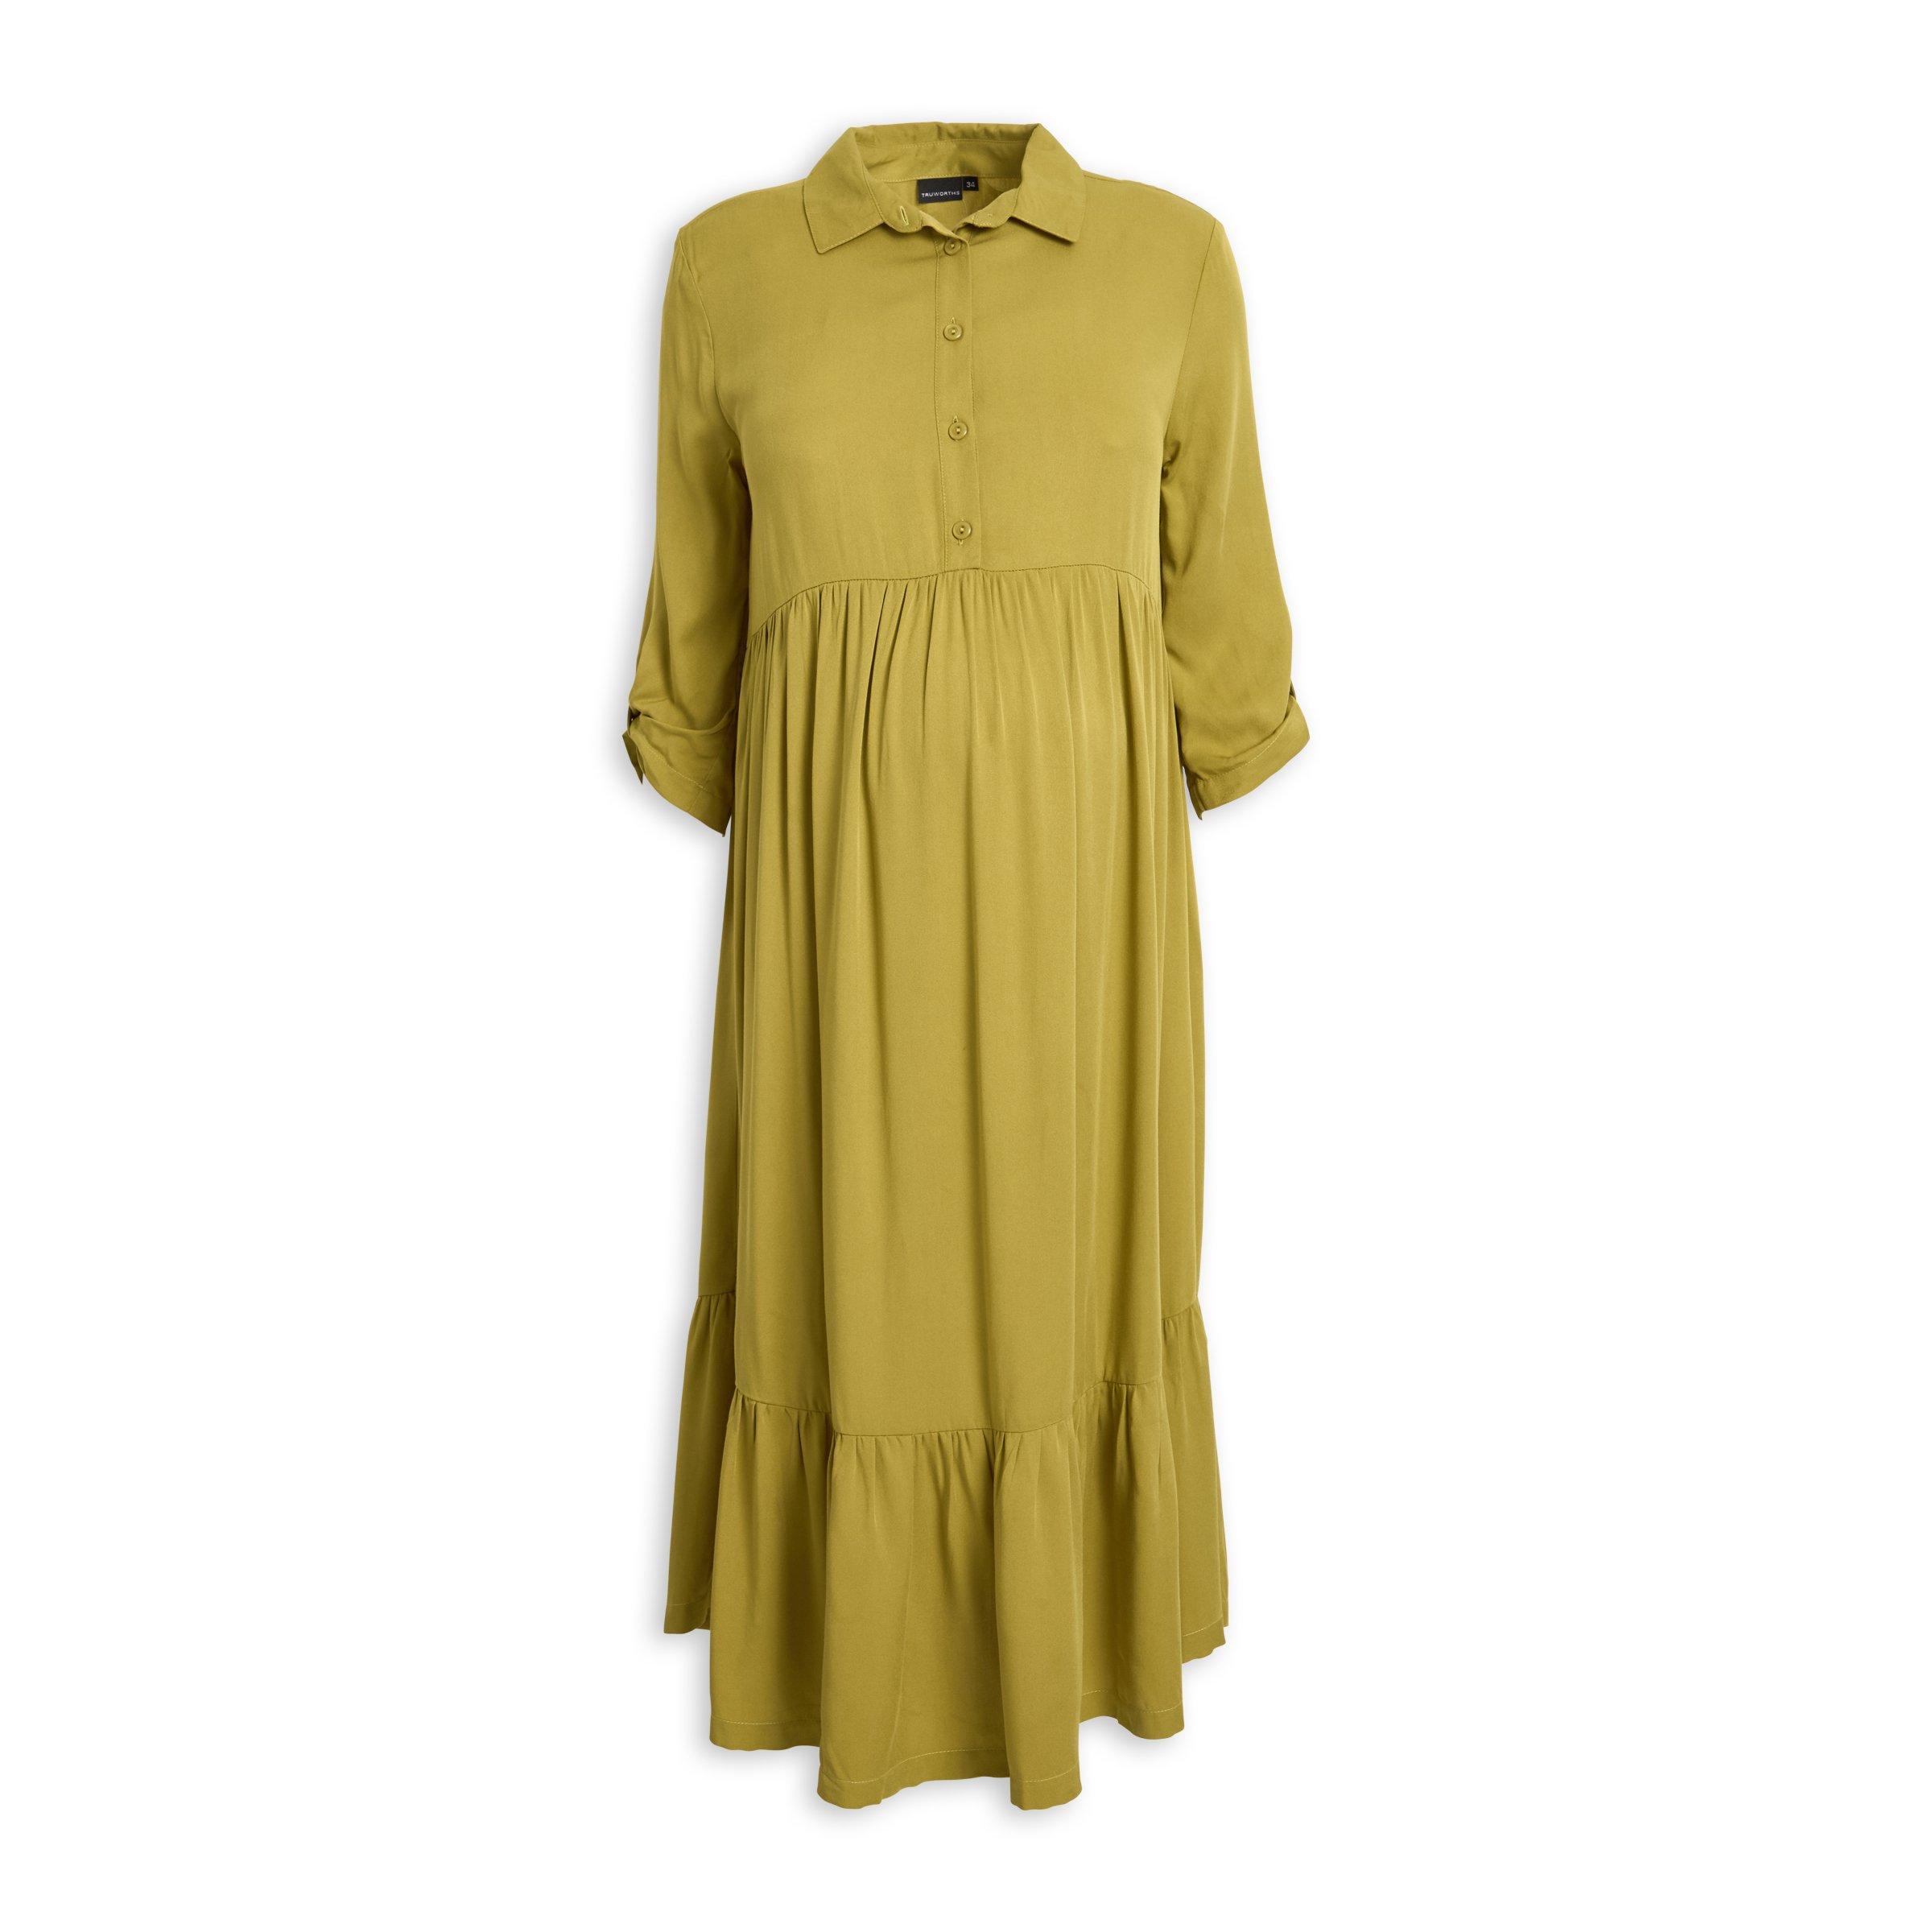 Buy Truworths Mustard Shirt Dress Online | Truworths